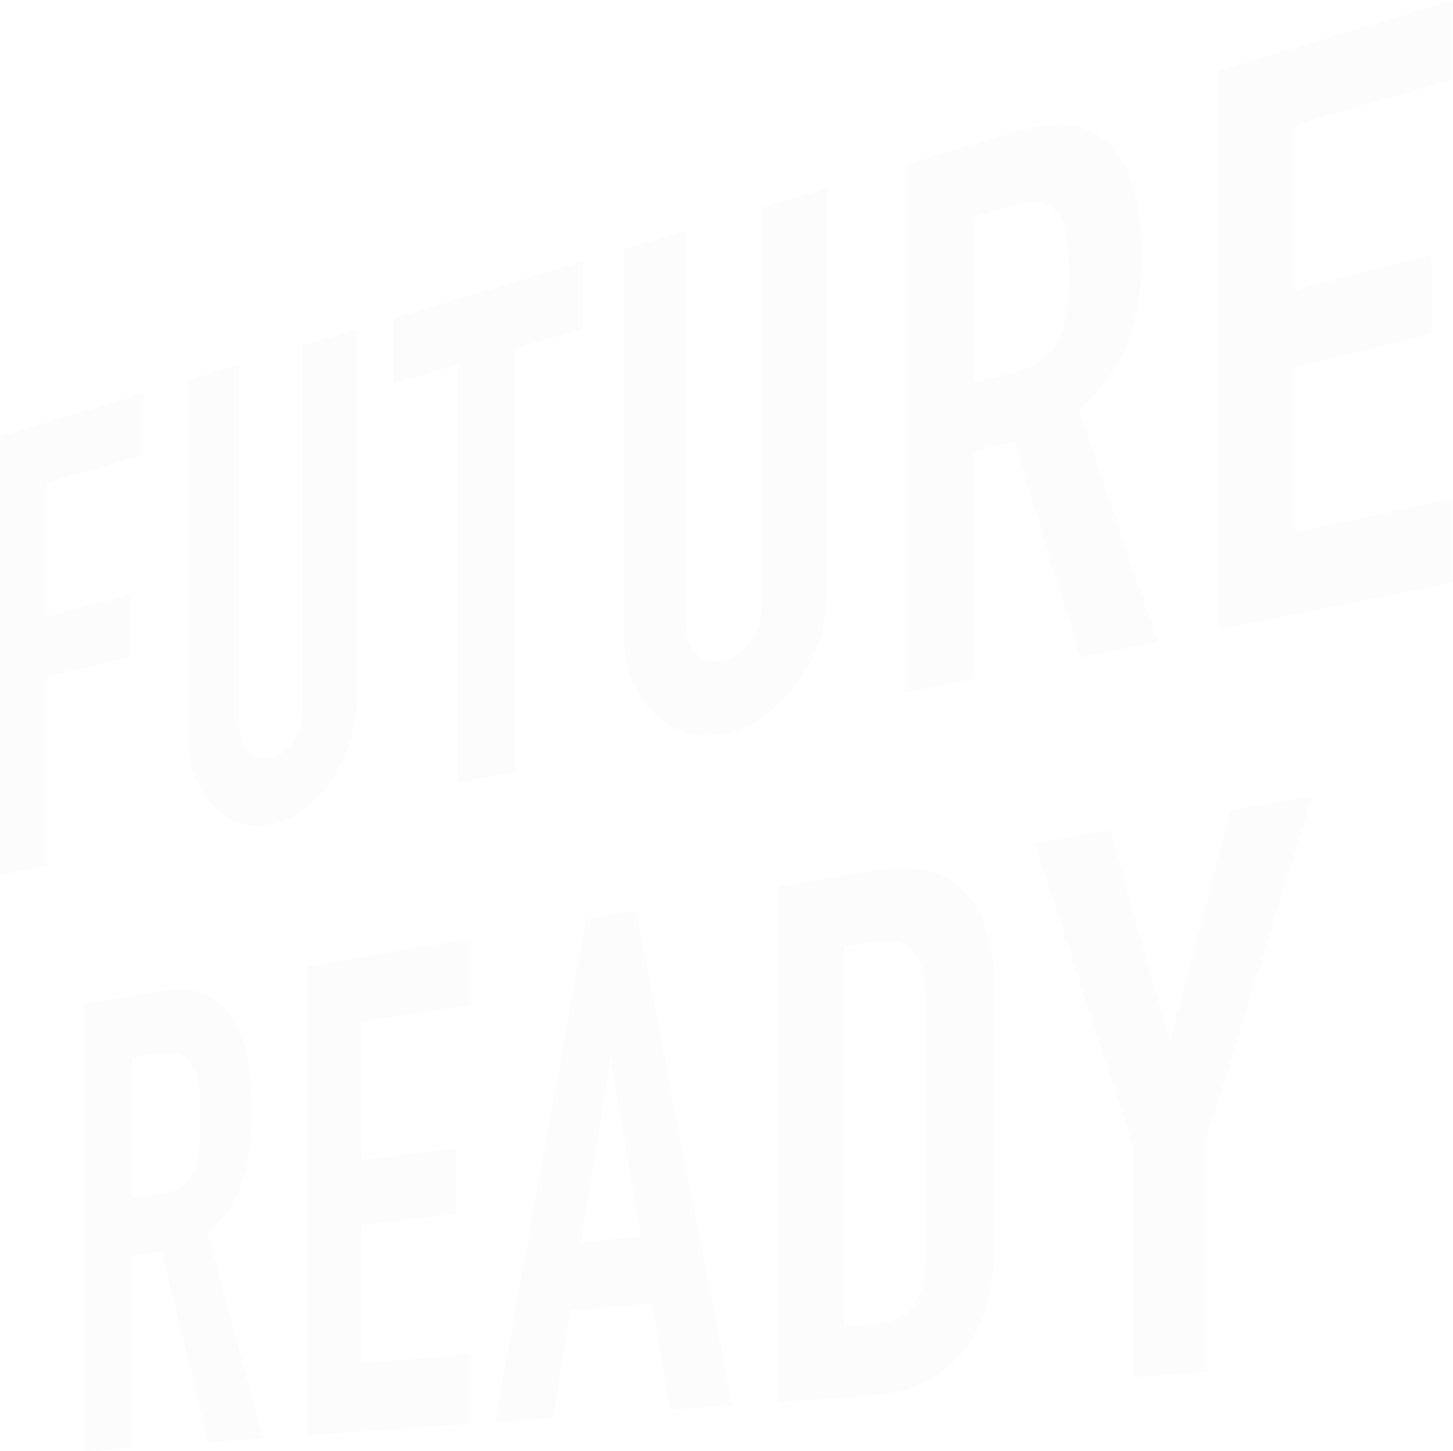 Future Ready